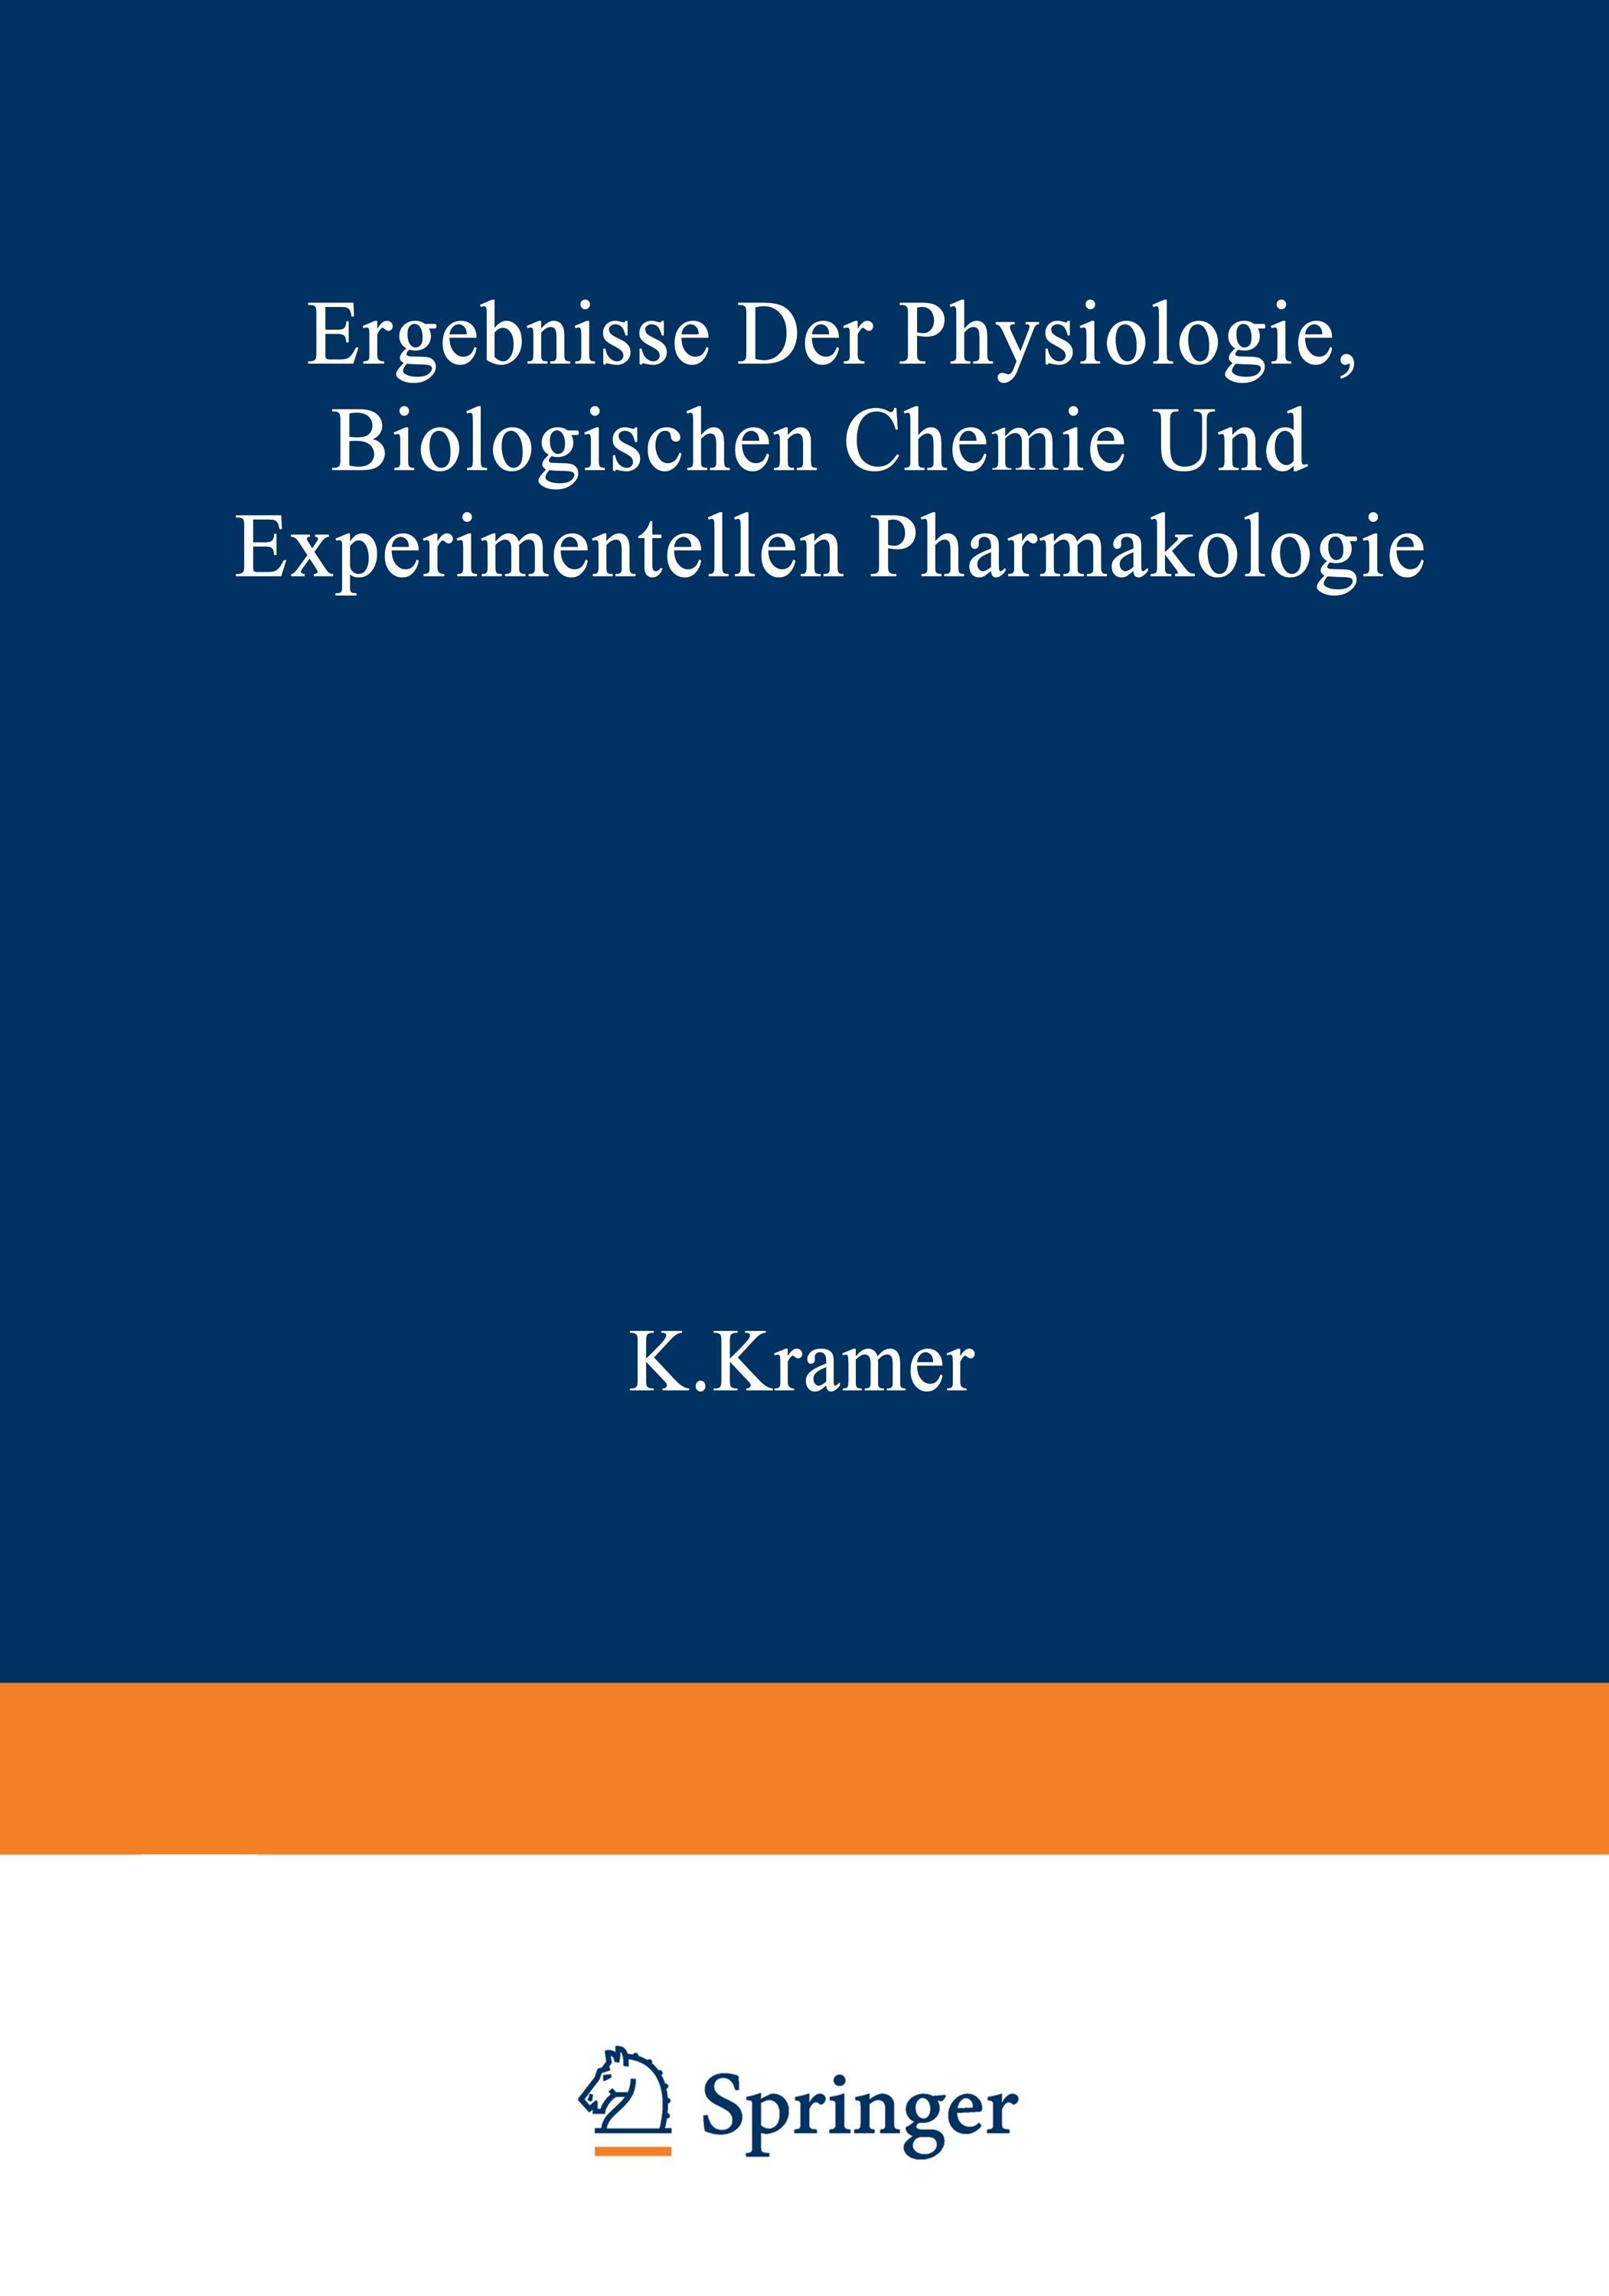 Ergebnisse der Physiologie Biologischen Chemie und Experimentellen Pharmakologie - K. Kramer|O. Krayer|E. Lehnartz|A. v. Muralt|H. H. Weber